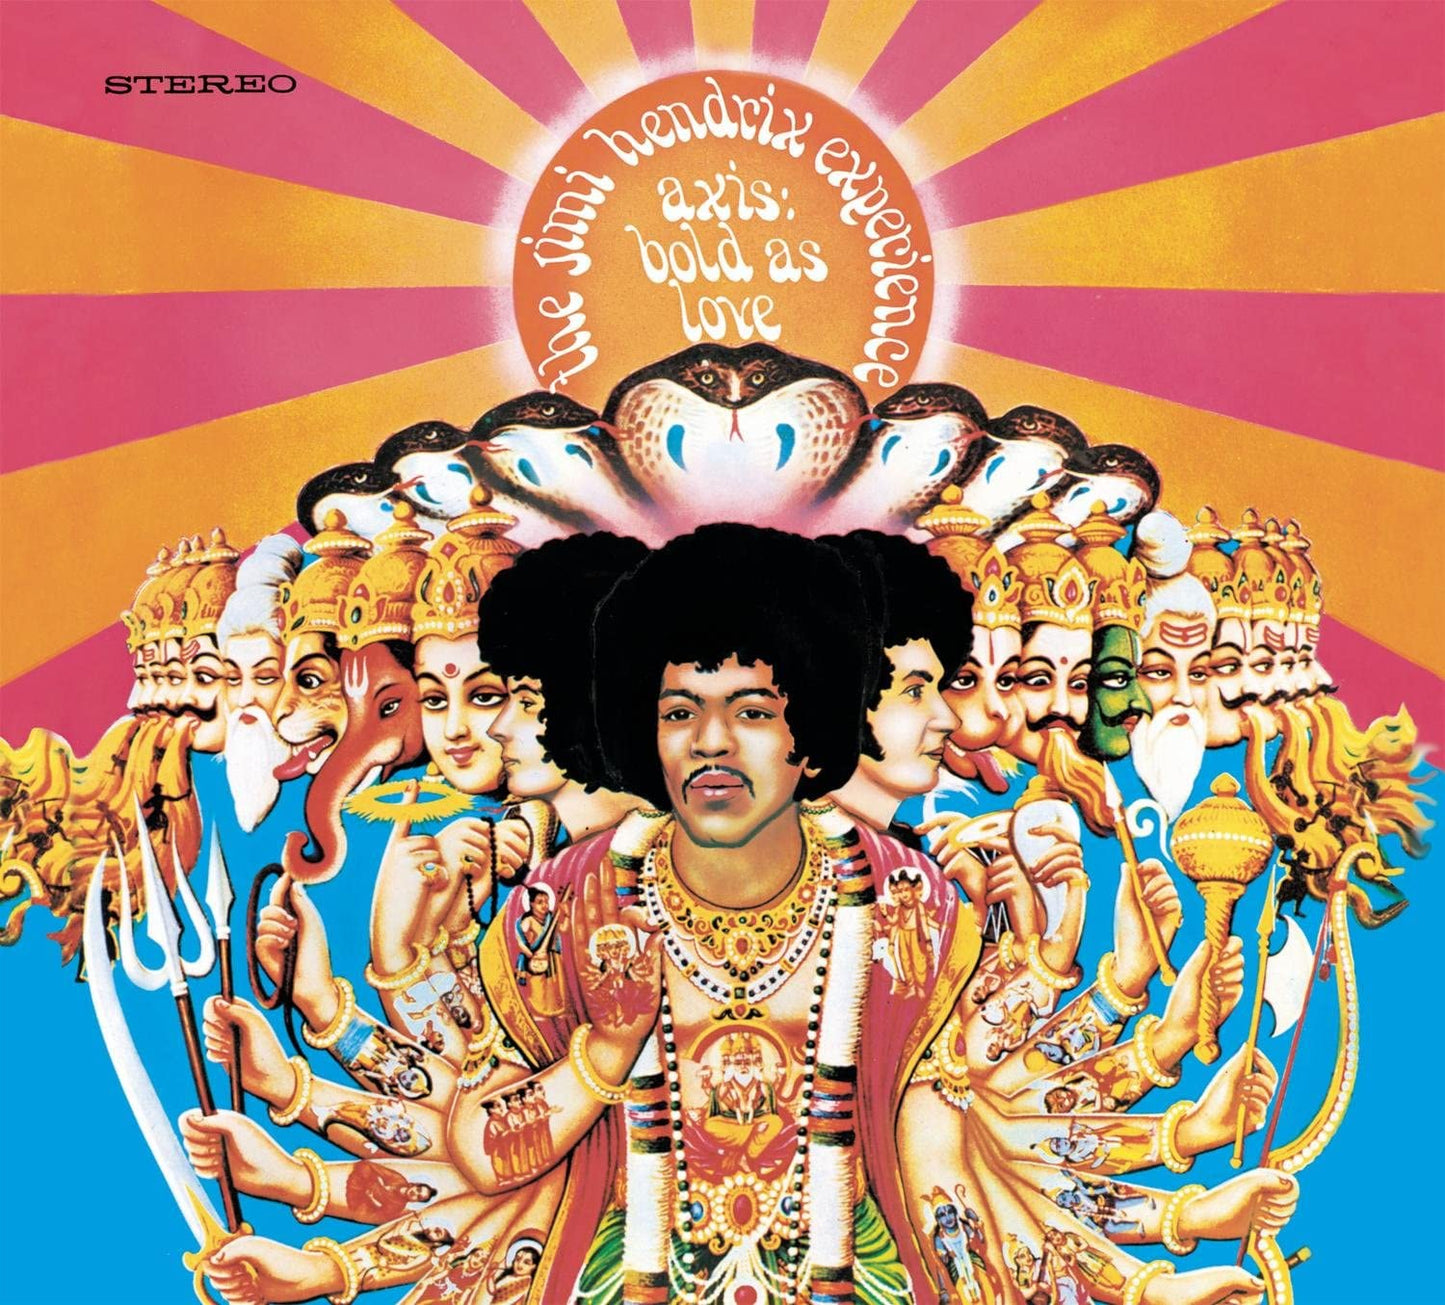 Hendrix, Jimi/Axis: Bold As Love (Stereo) [LP]